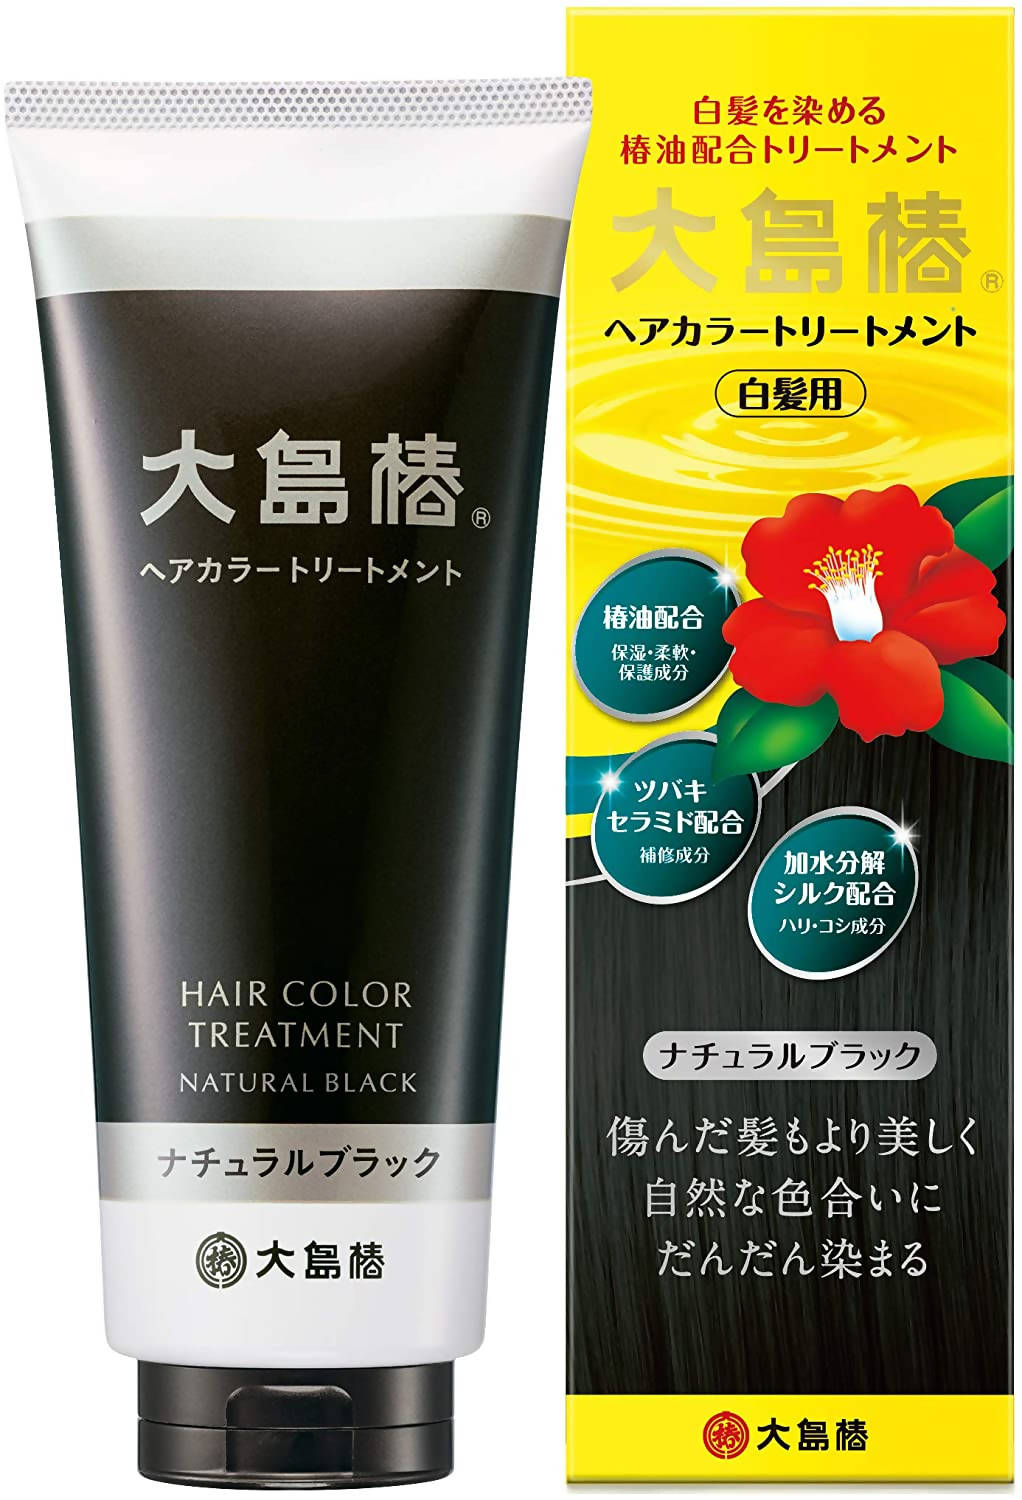 Oshima Tsubaki Hair Color Treatment Natural Black Hair Dye 180g Allegro Japan